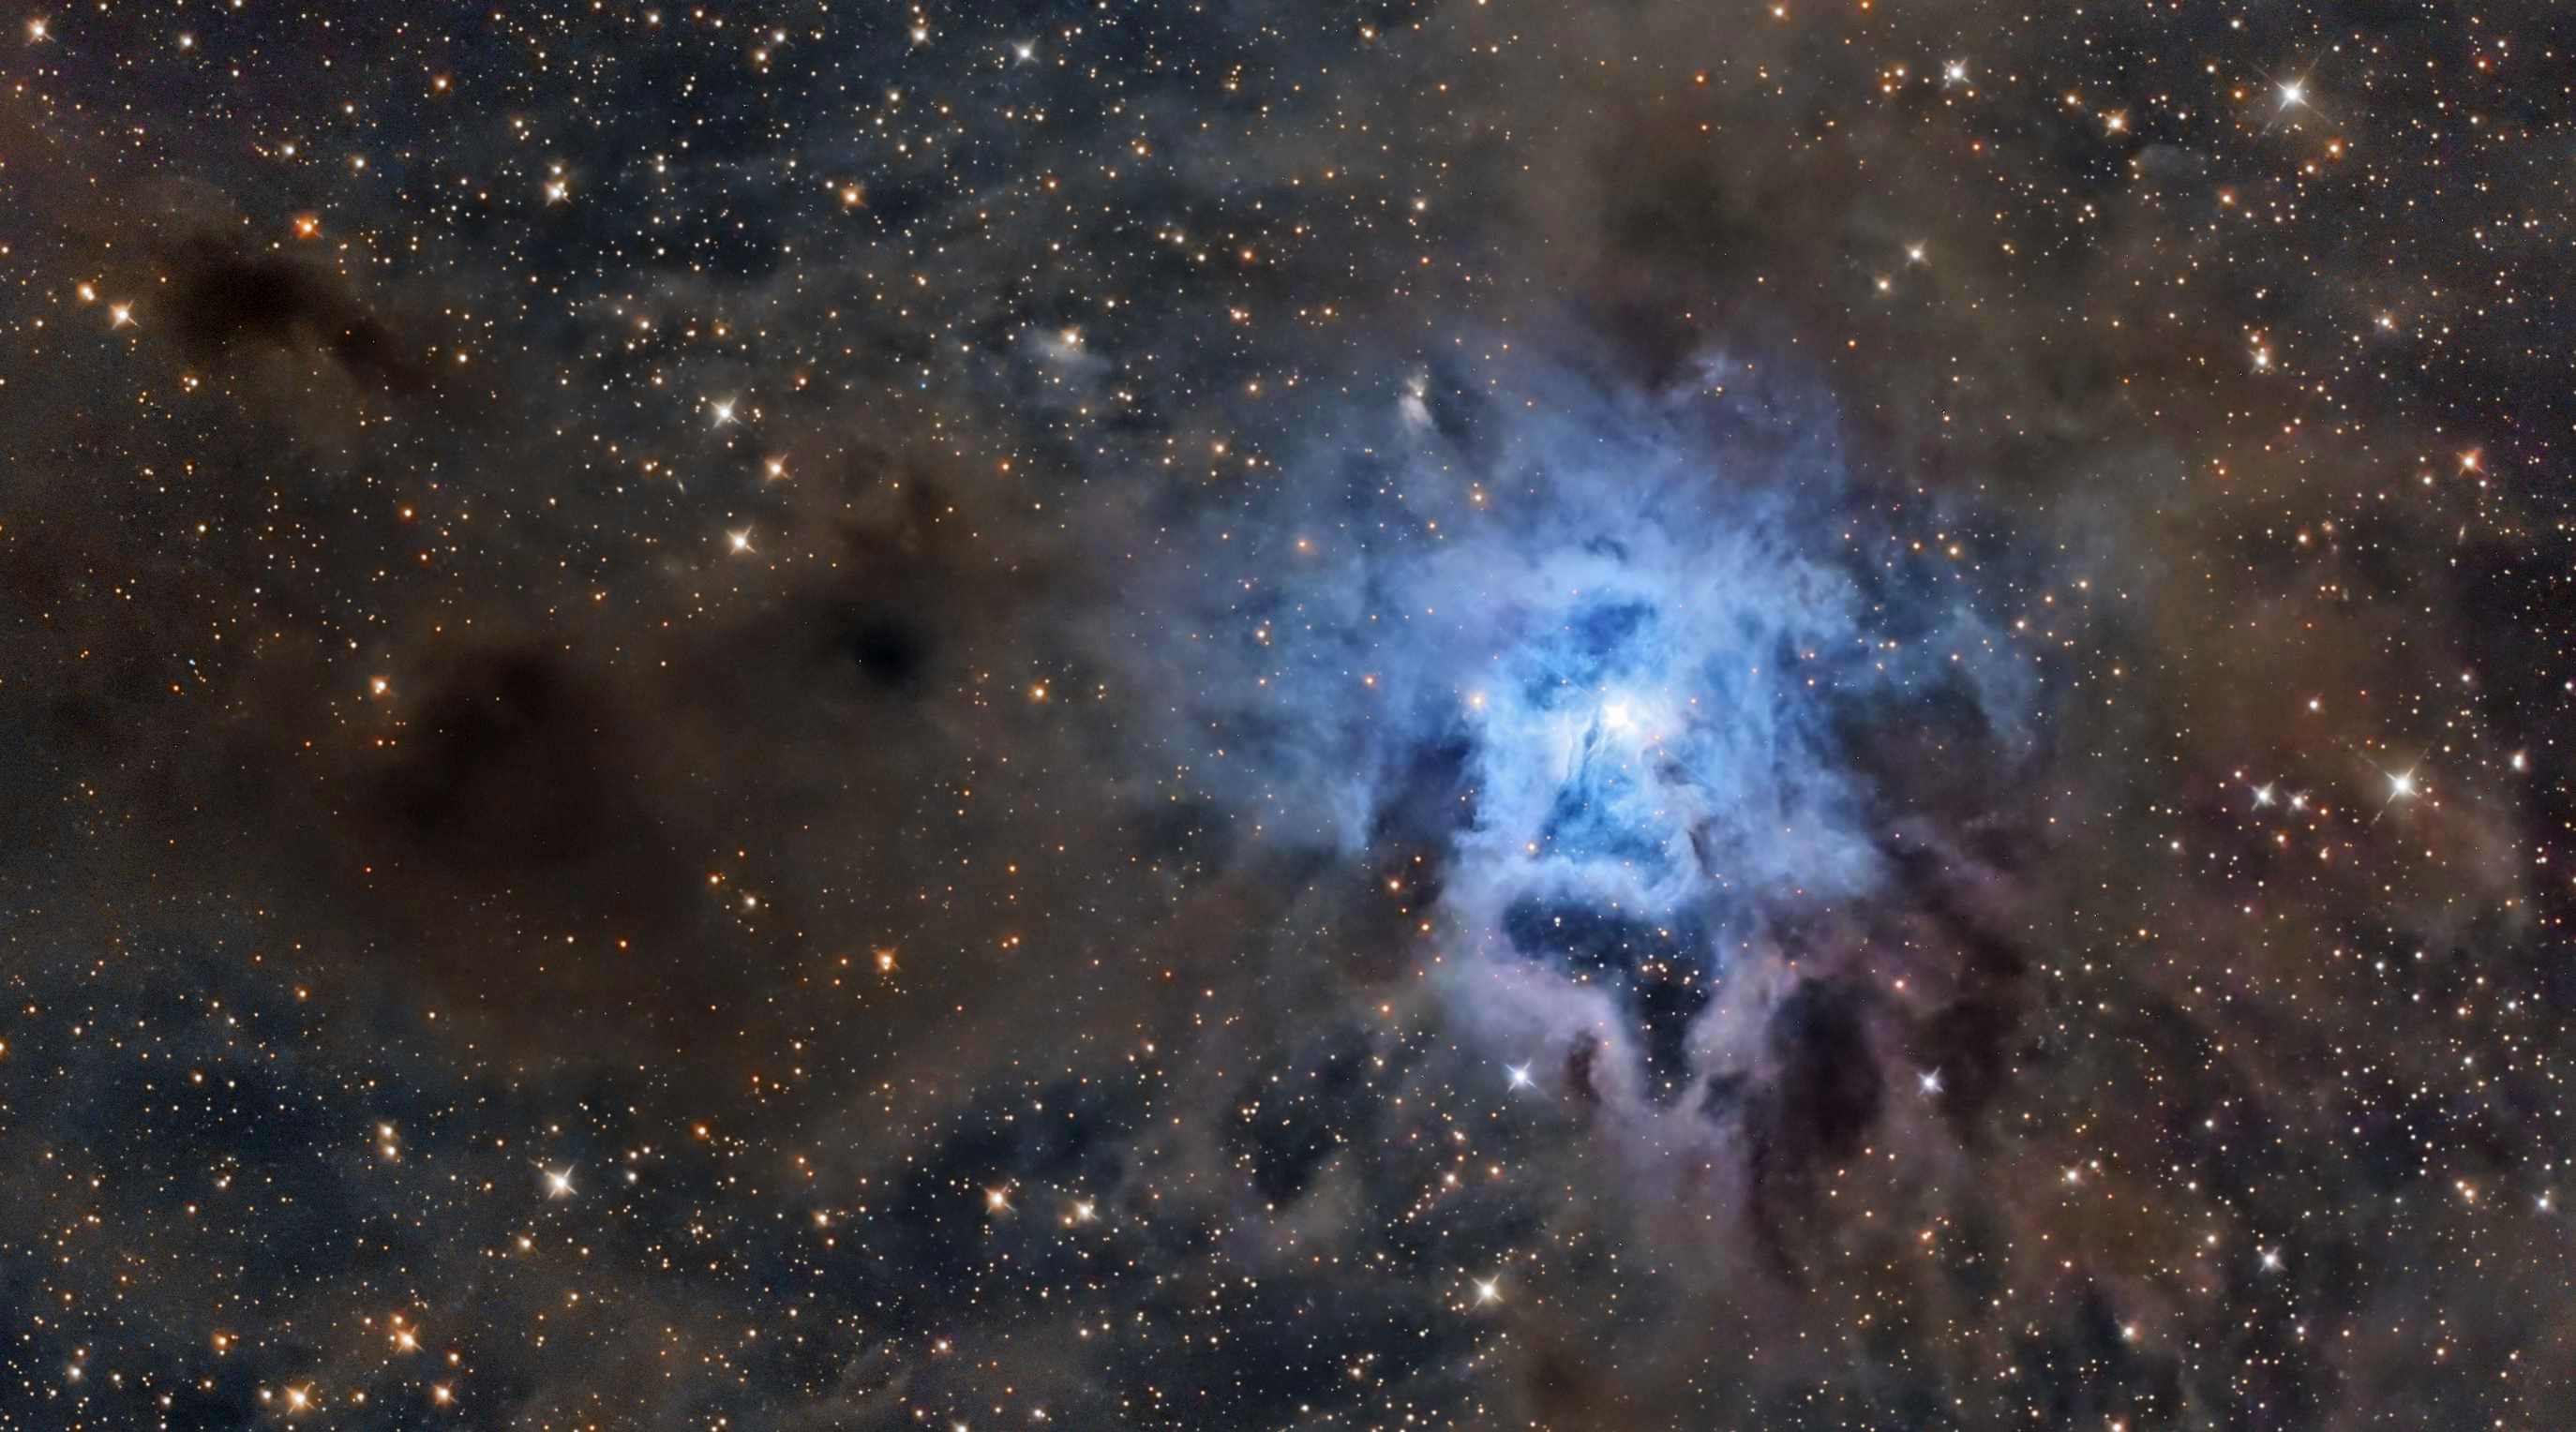 iris Nebula